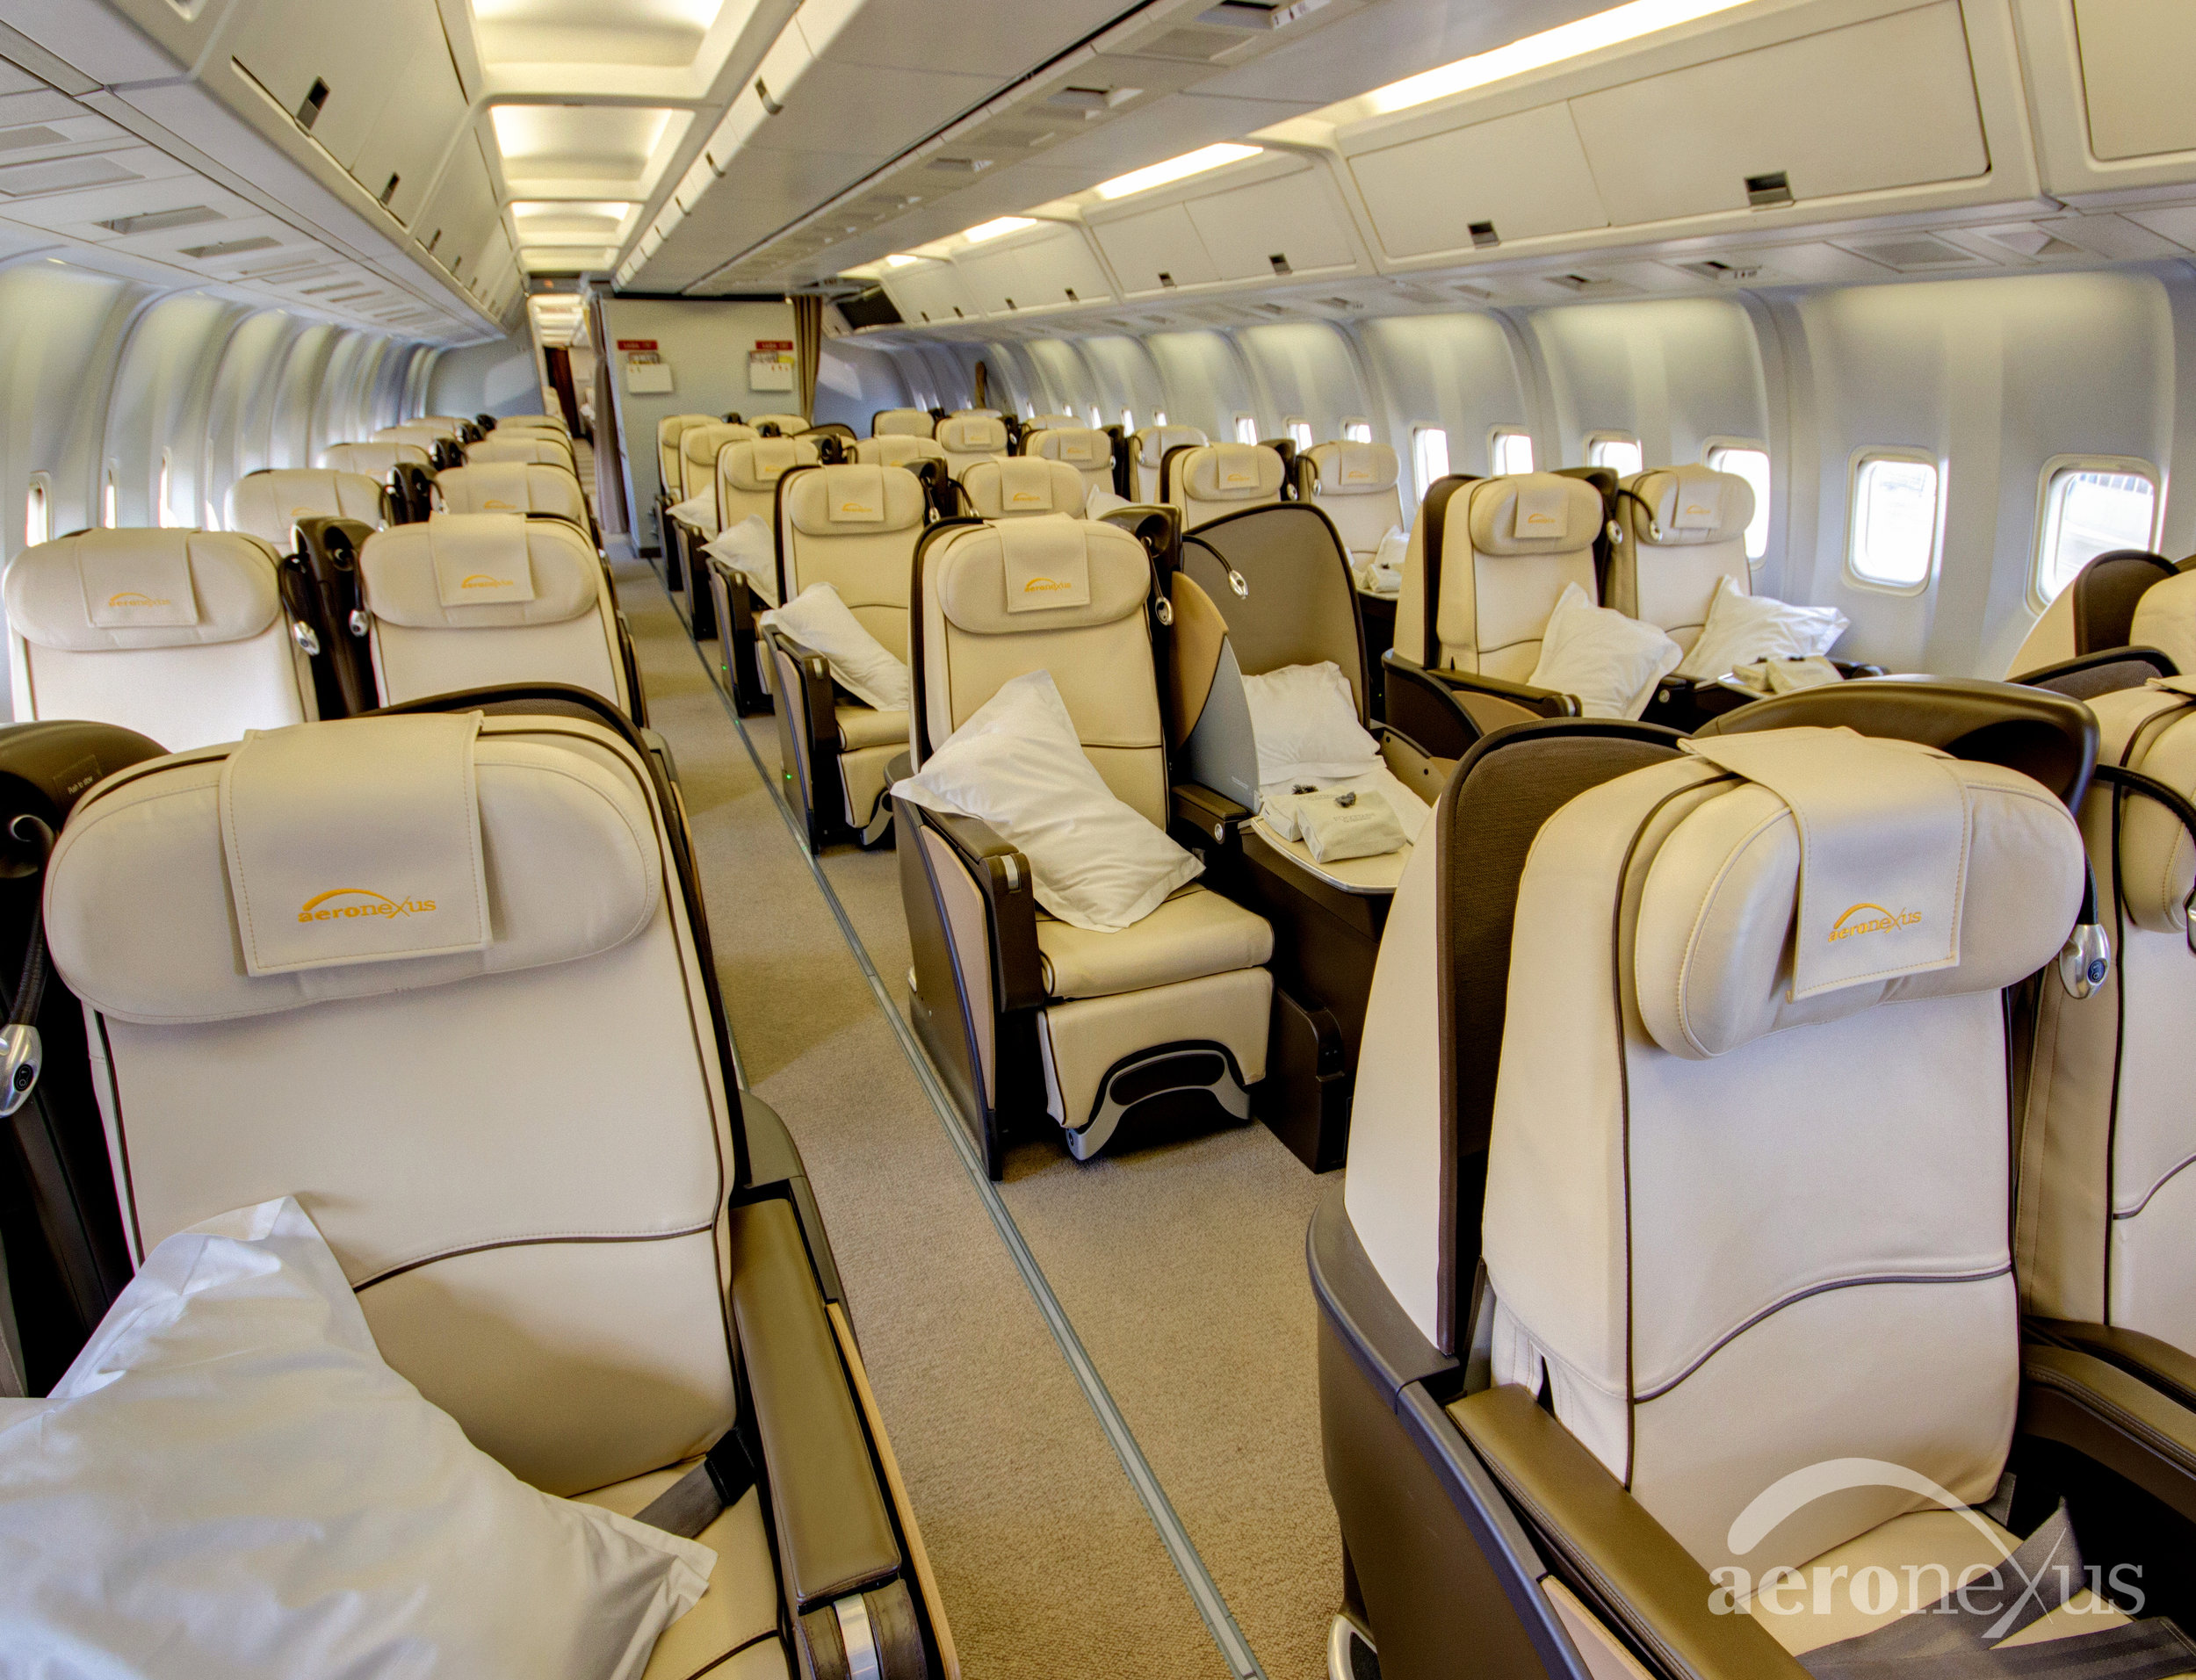 Aeronexus | VIP Boeing 767-300ER | Interior Seating